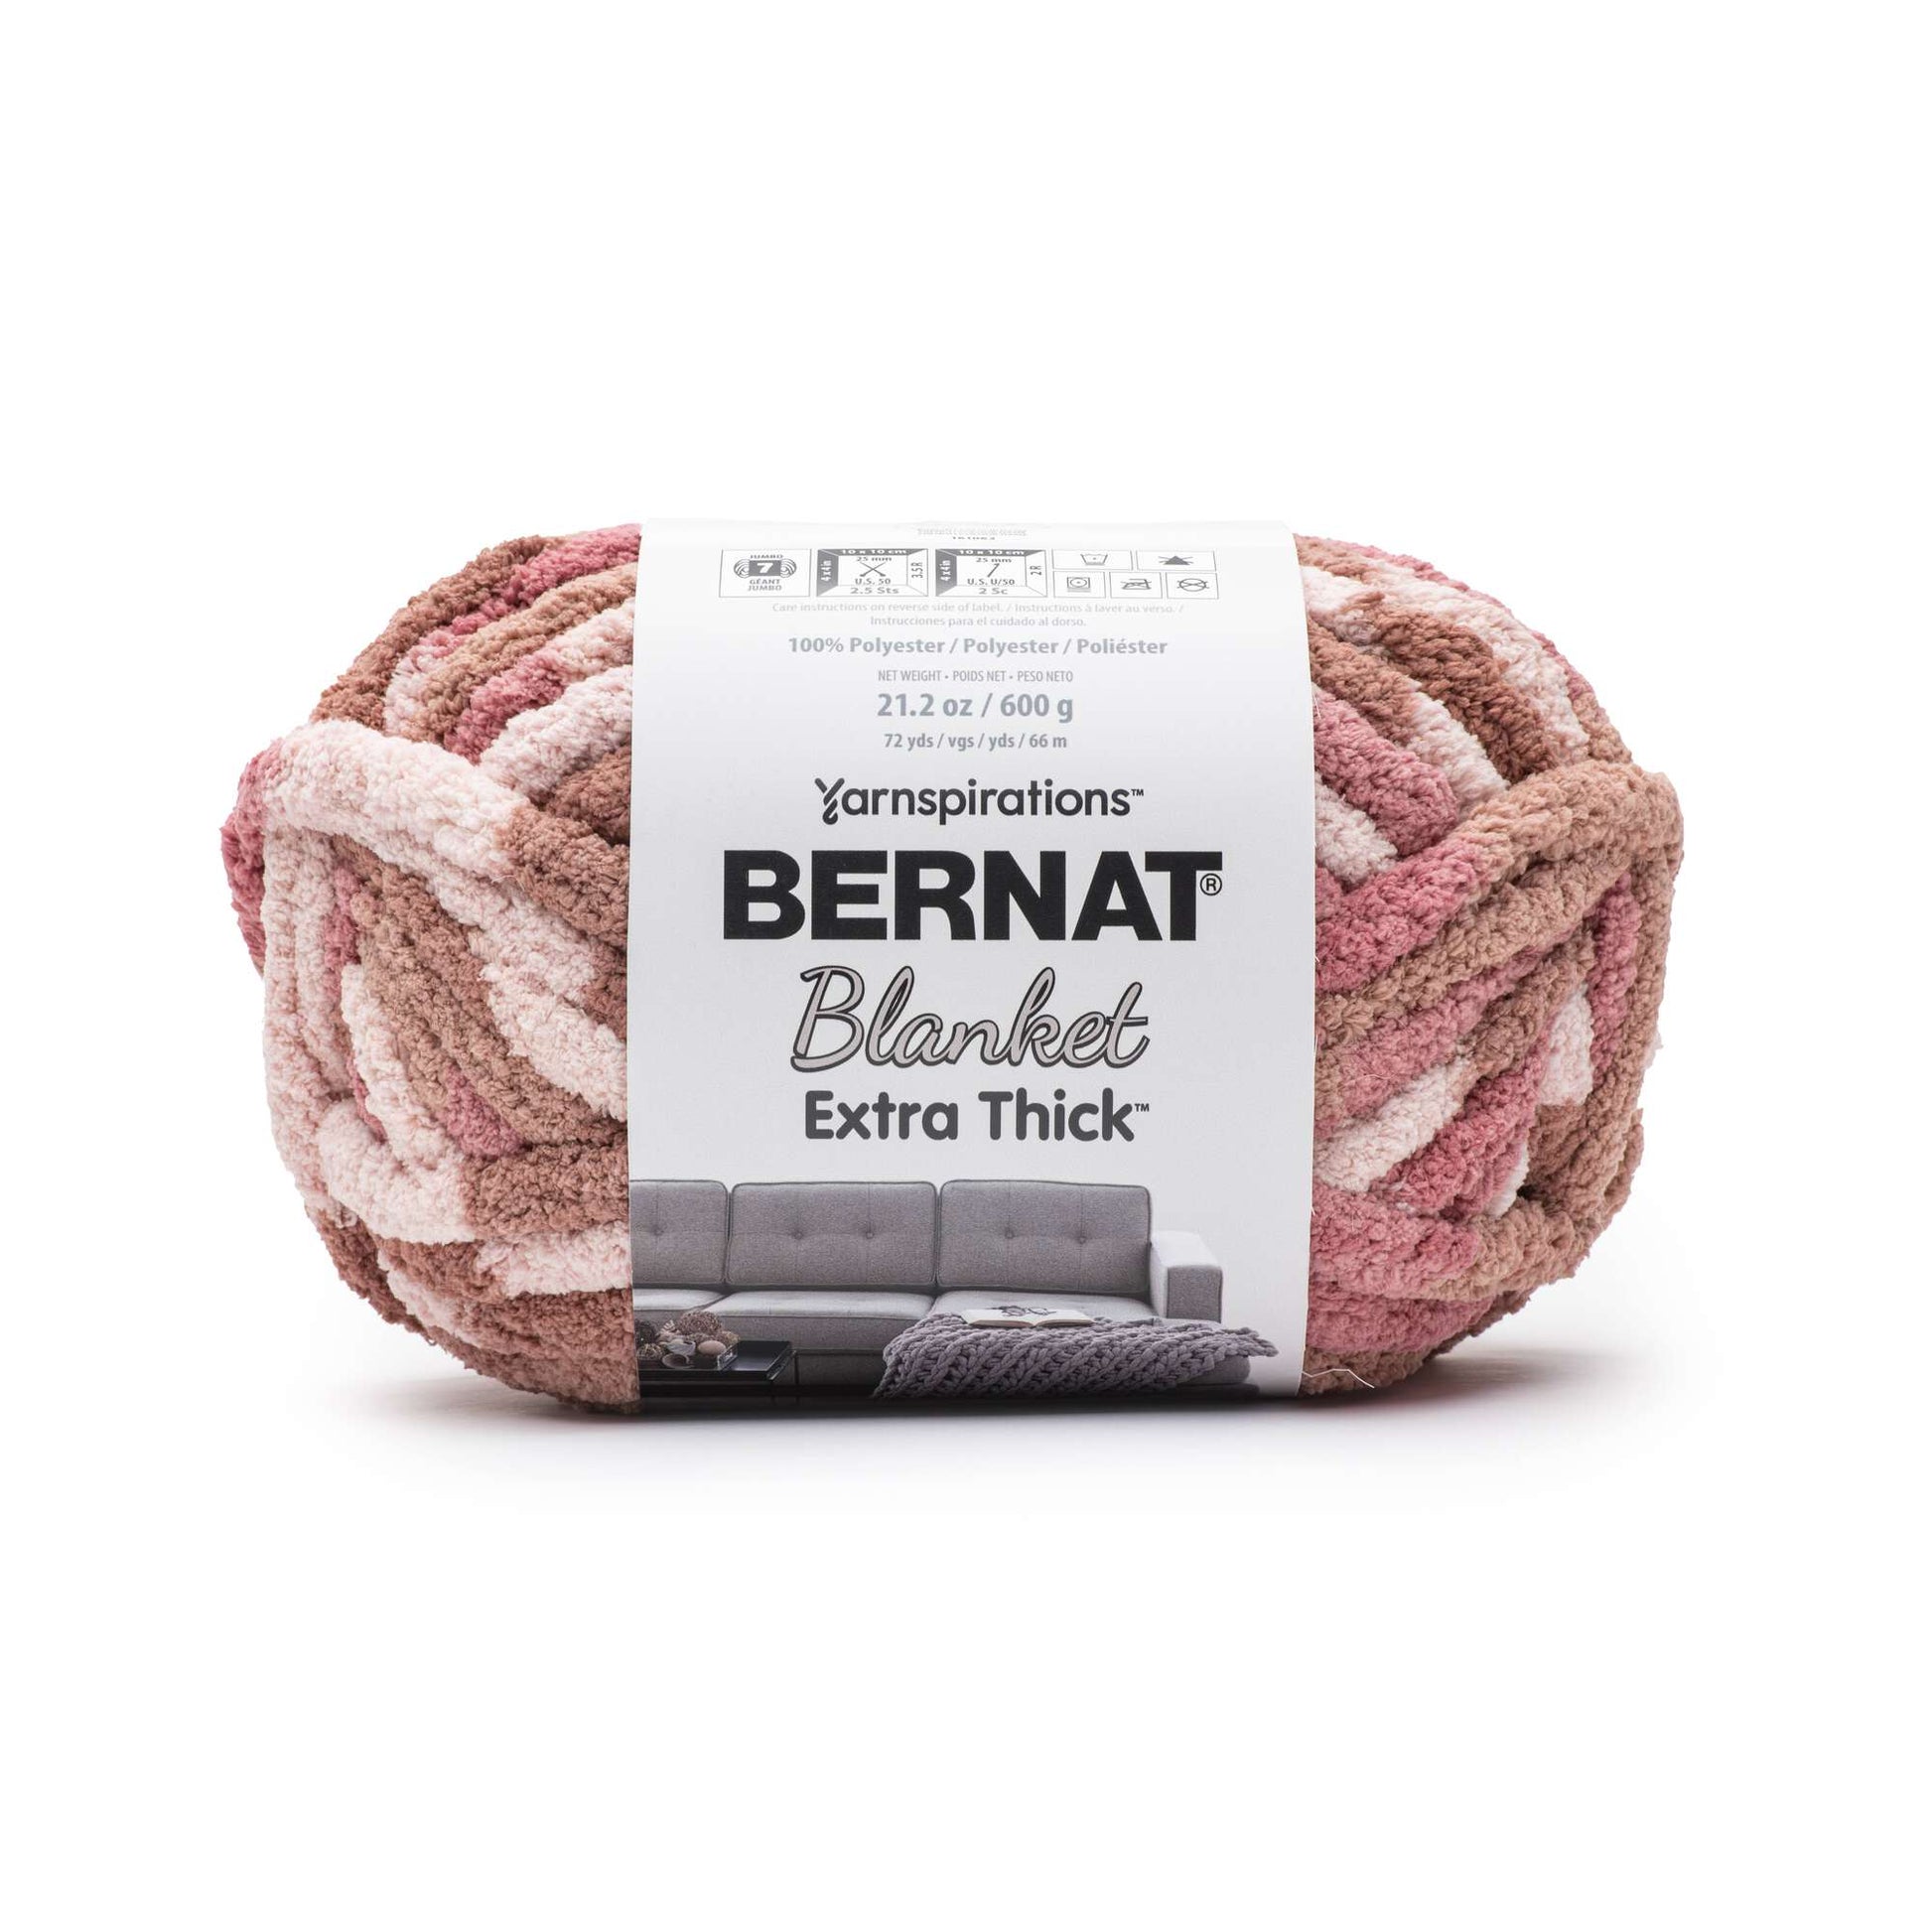 Bernat Blanket Big Ball Yarn-Ocean Shades, 1 count - Pay Less Super Markets